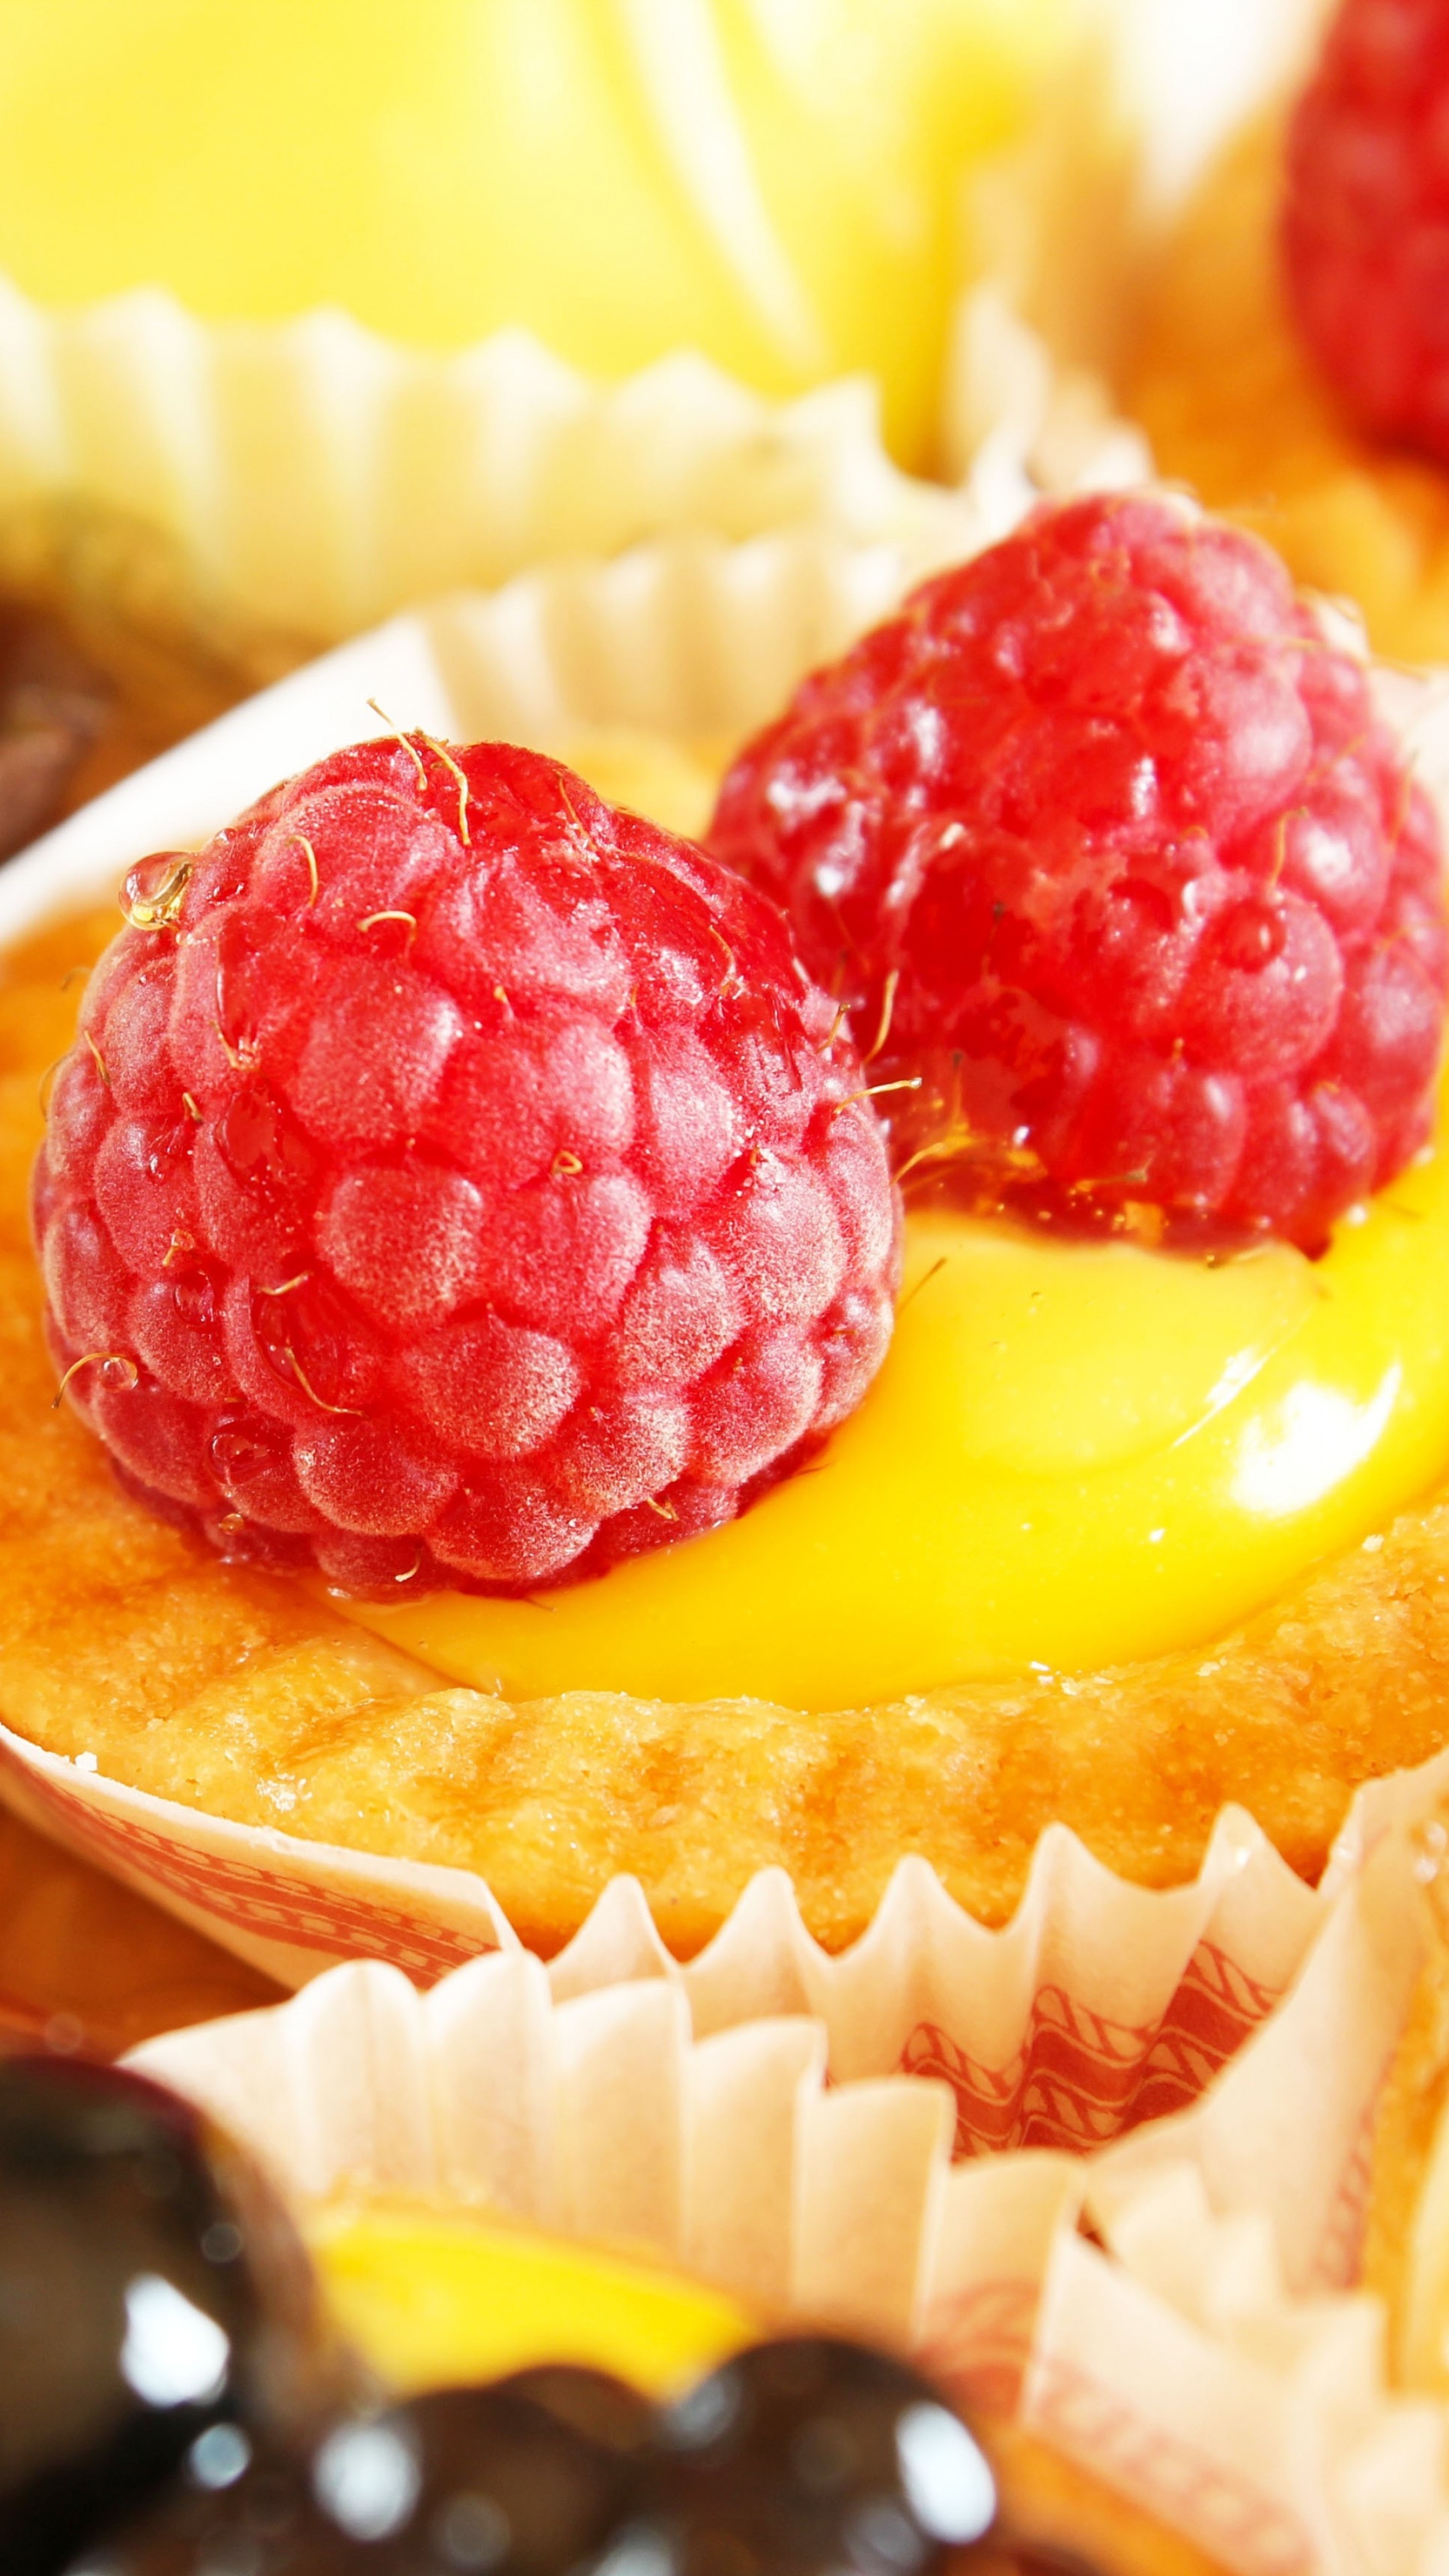 Delicious cupcake, Berry explosion, Tempting treat, Edible artwork, 2160x3840 4K Phone